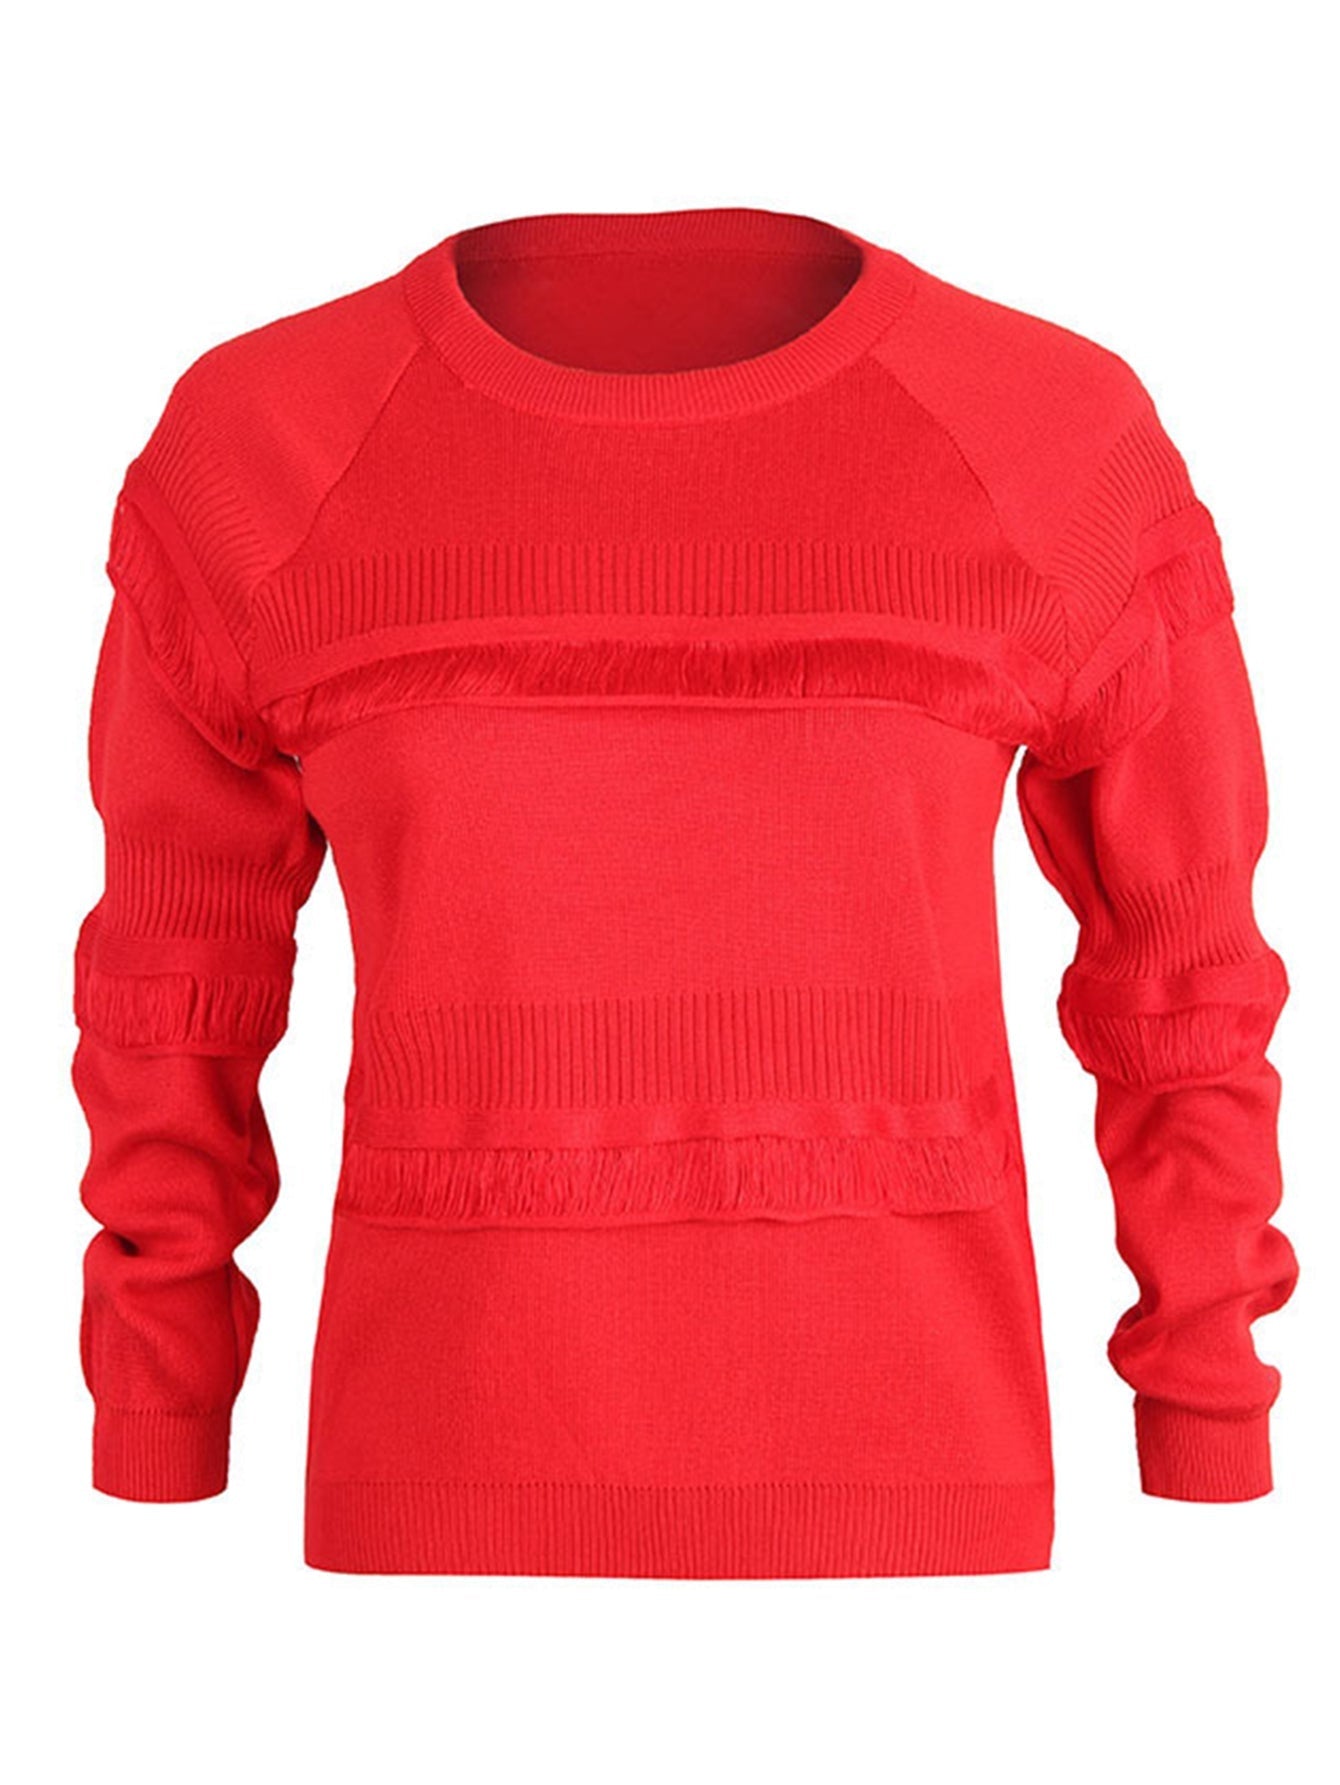 Women's splice casual slim round collar knitting sweater Sai Feel